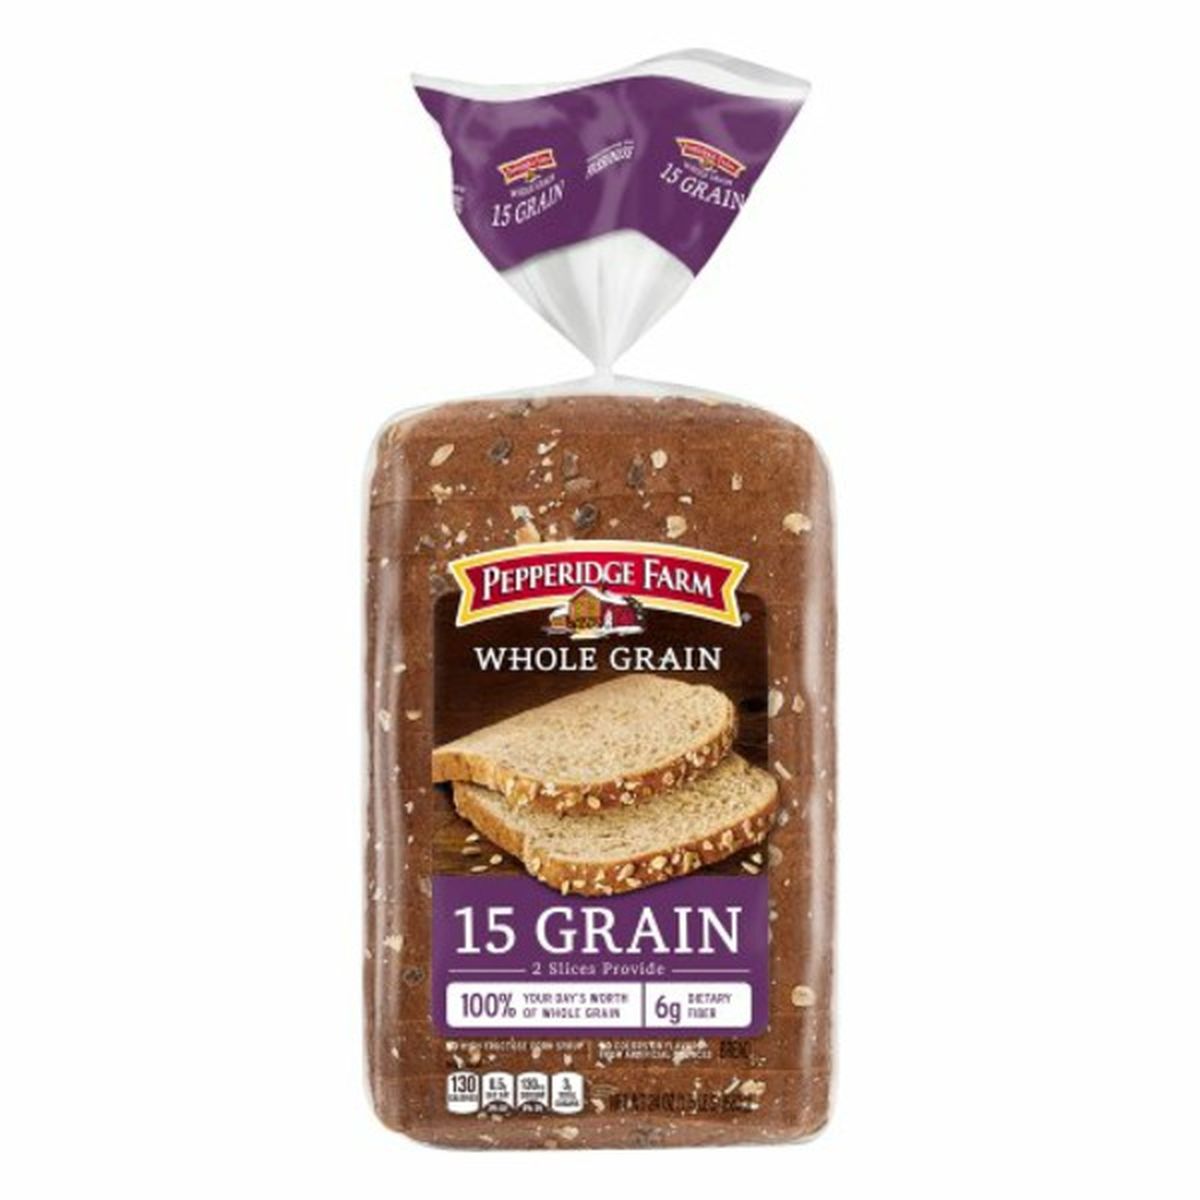 Calories in Pepperidge Farms  Whole Grain Whole Grain Pepperidge Farms Whole Grain 15 Grain Bread, 24 oz. Bag